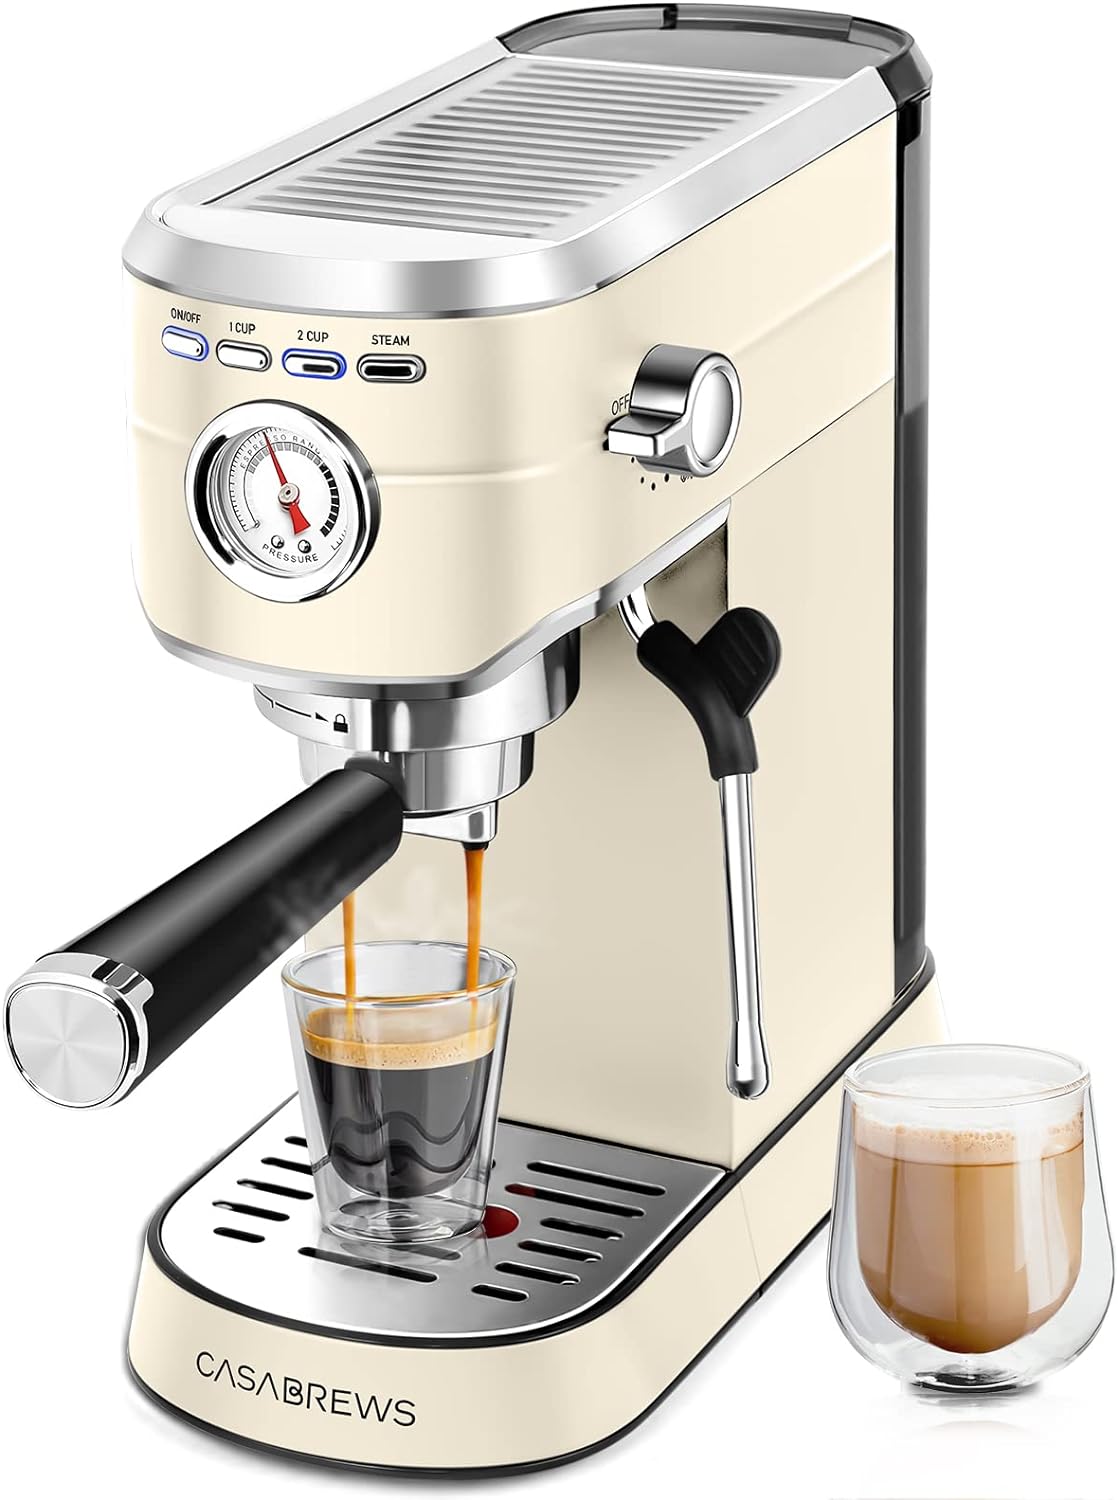 CASABREWS Espresso Machine 20 Bar, Espresso Maker with Milk Frother Steam Wand, Stainless Steel Espresso Coffee Machine with 34oz Removable Water Tank, Creamy